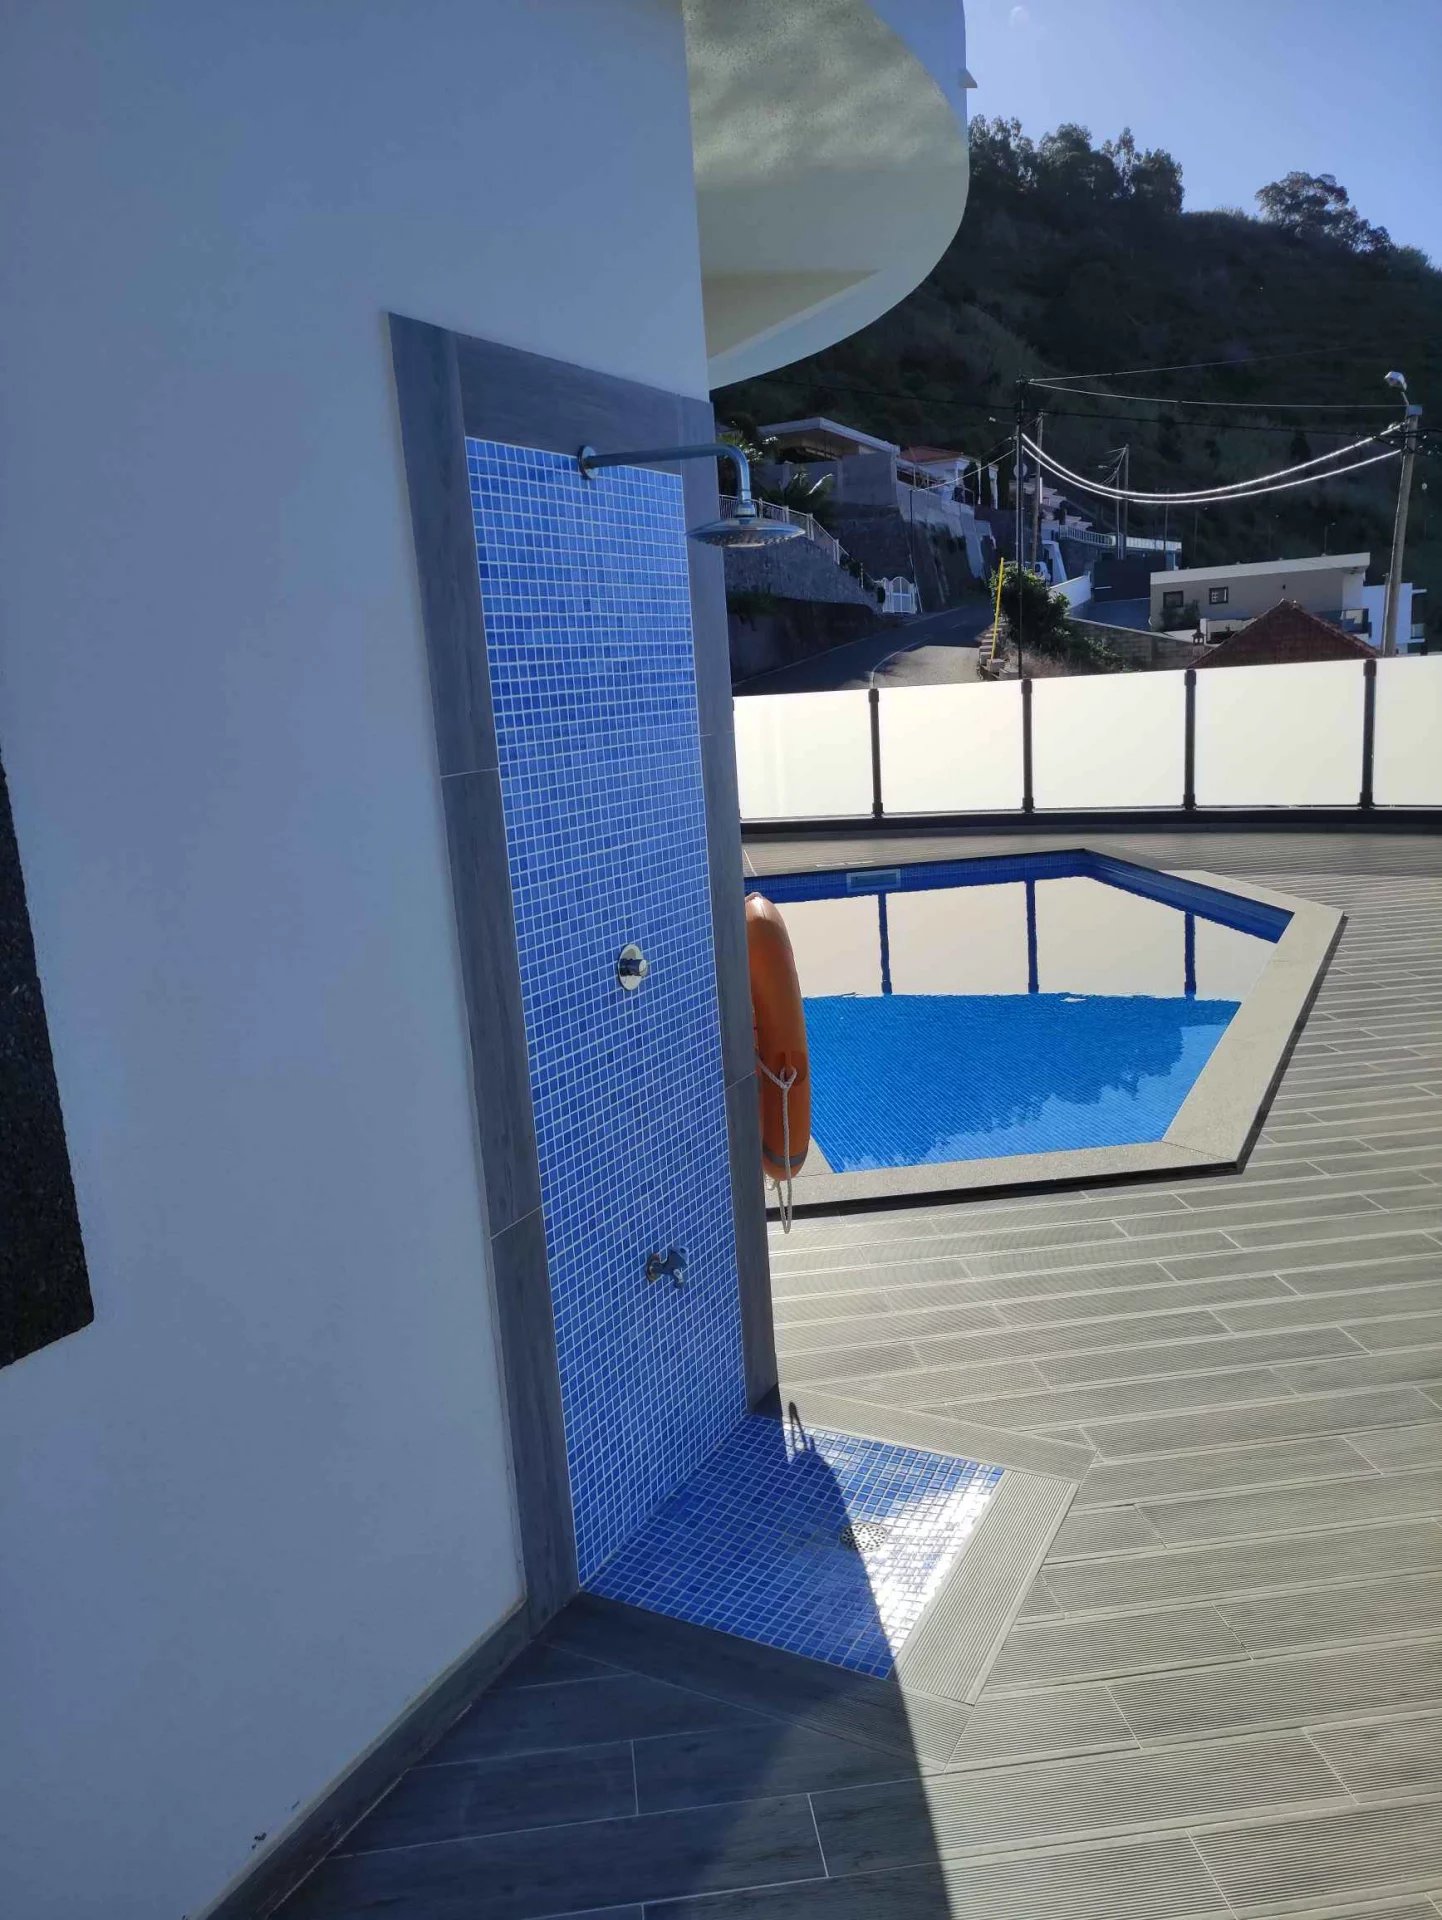 Charming villa with pool and panoramic ocean views in Arco de Calheta